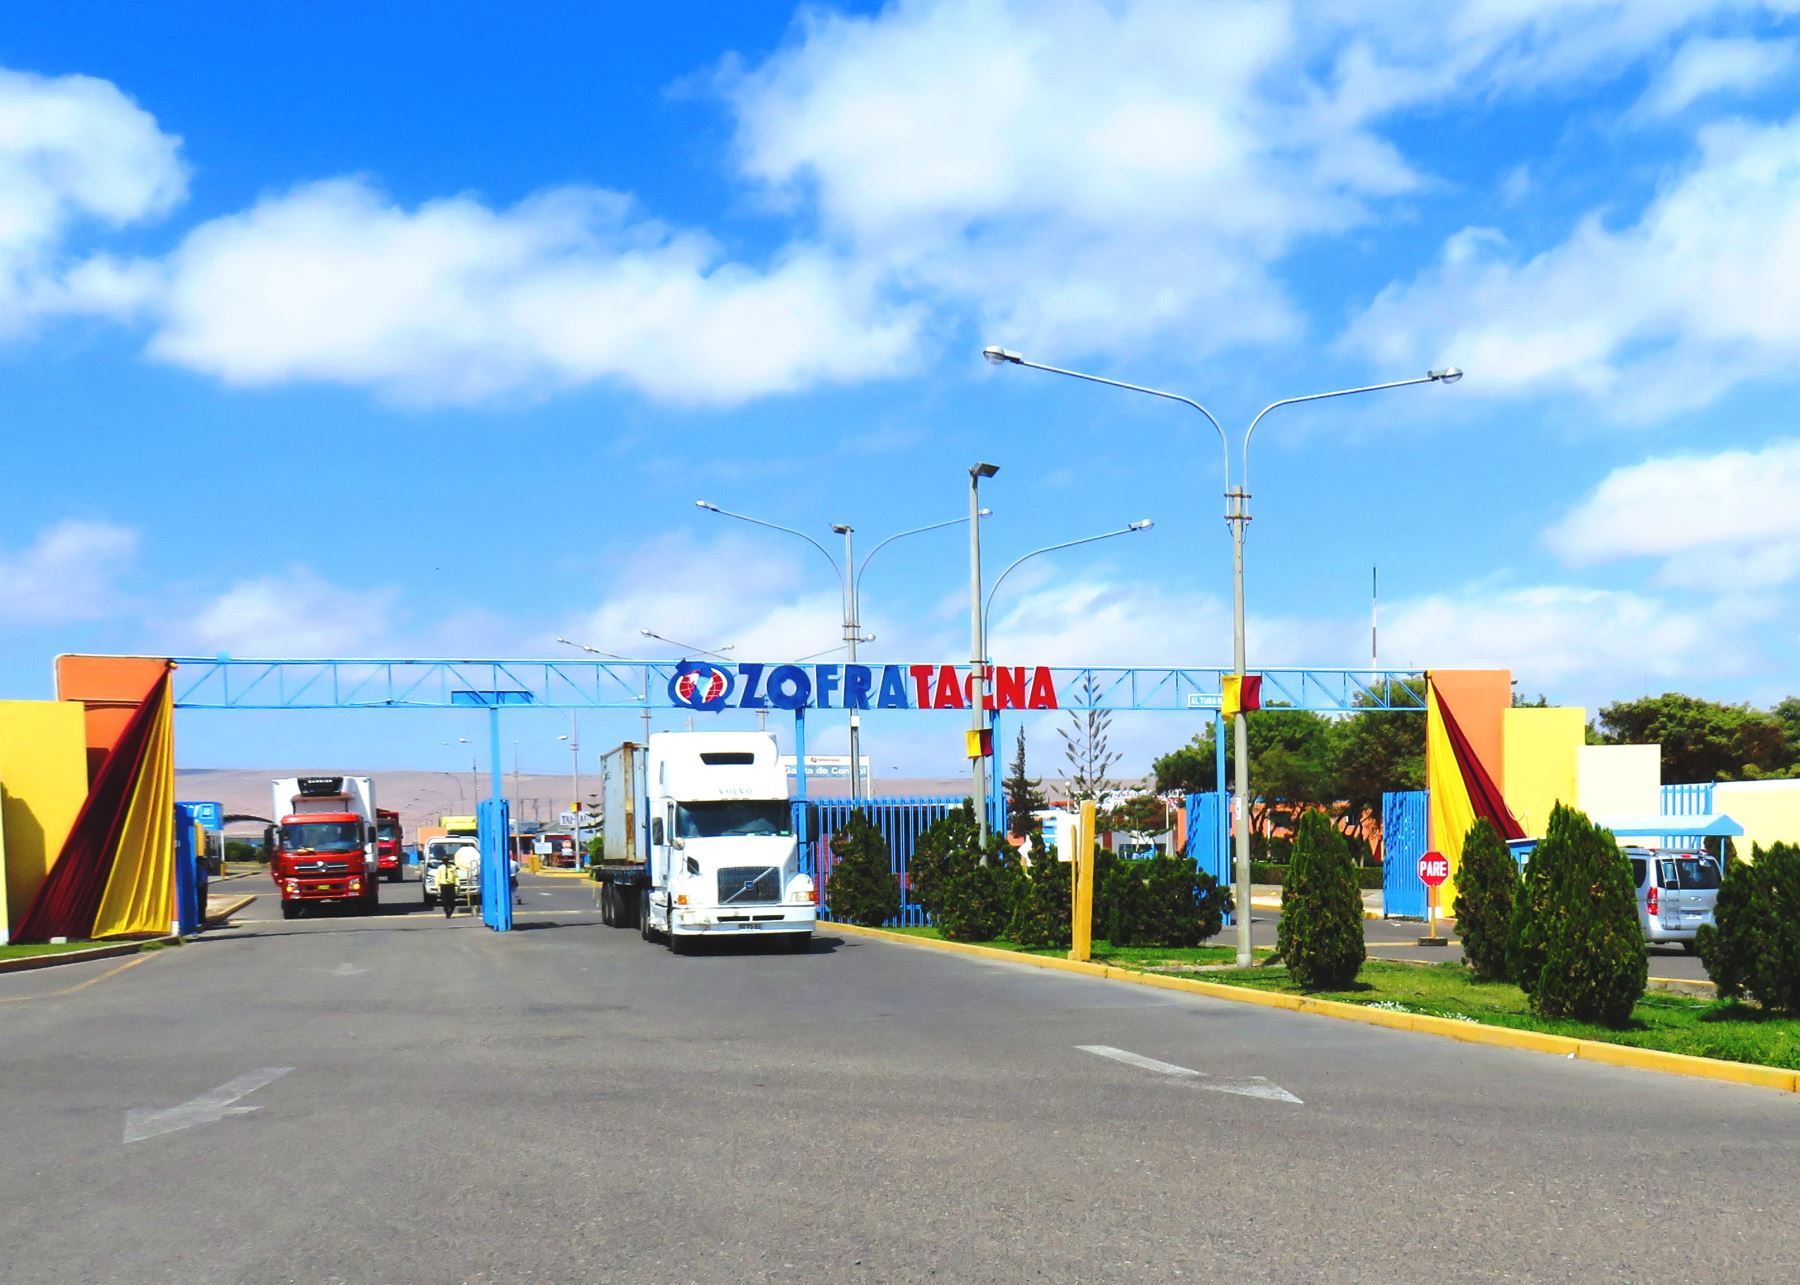 Tacna pide mejorar norma para dar nuevo impulso a Zofratacna. ANDINA/Difusión